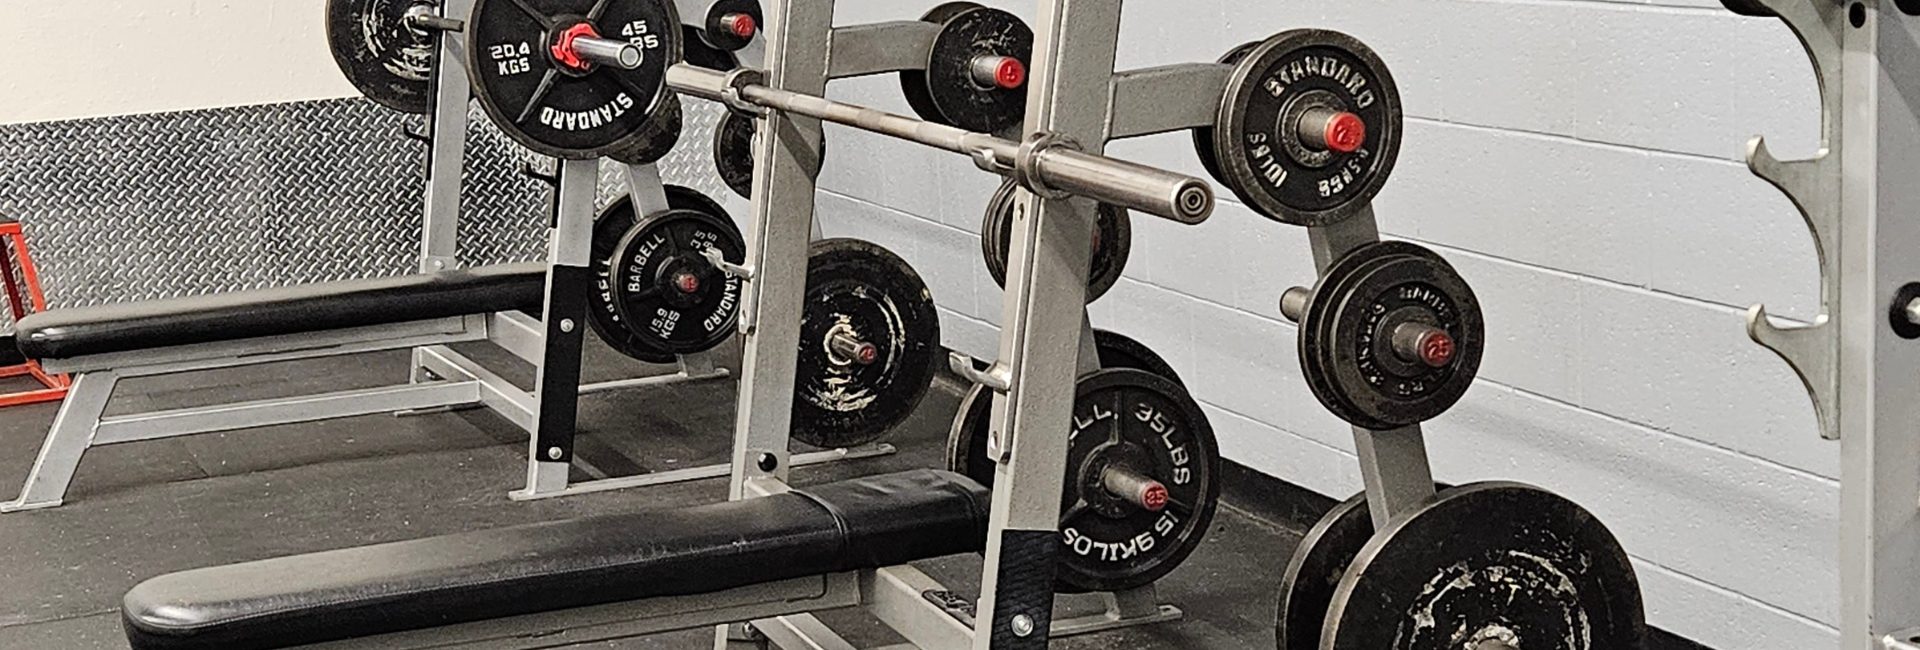 powerflex gym modern equipment strength training barbells and plates